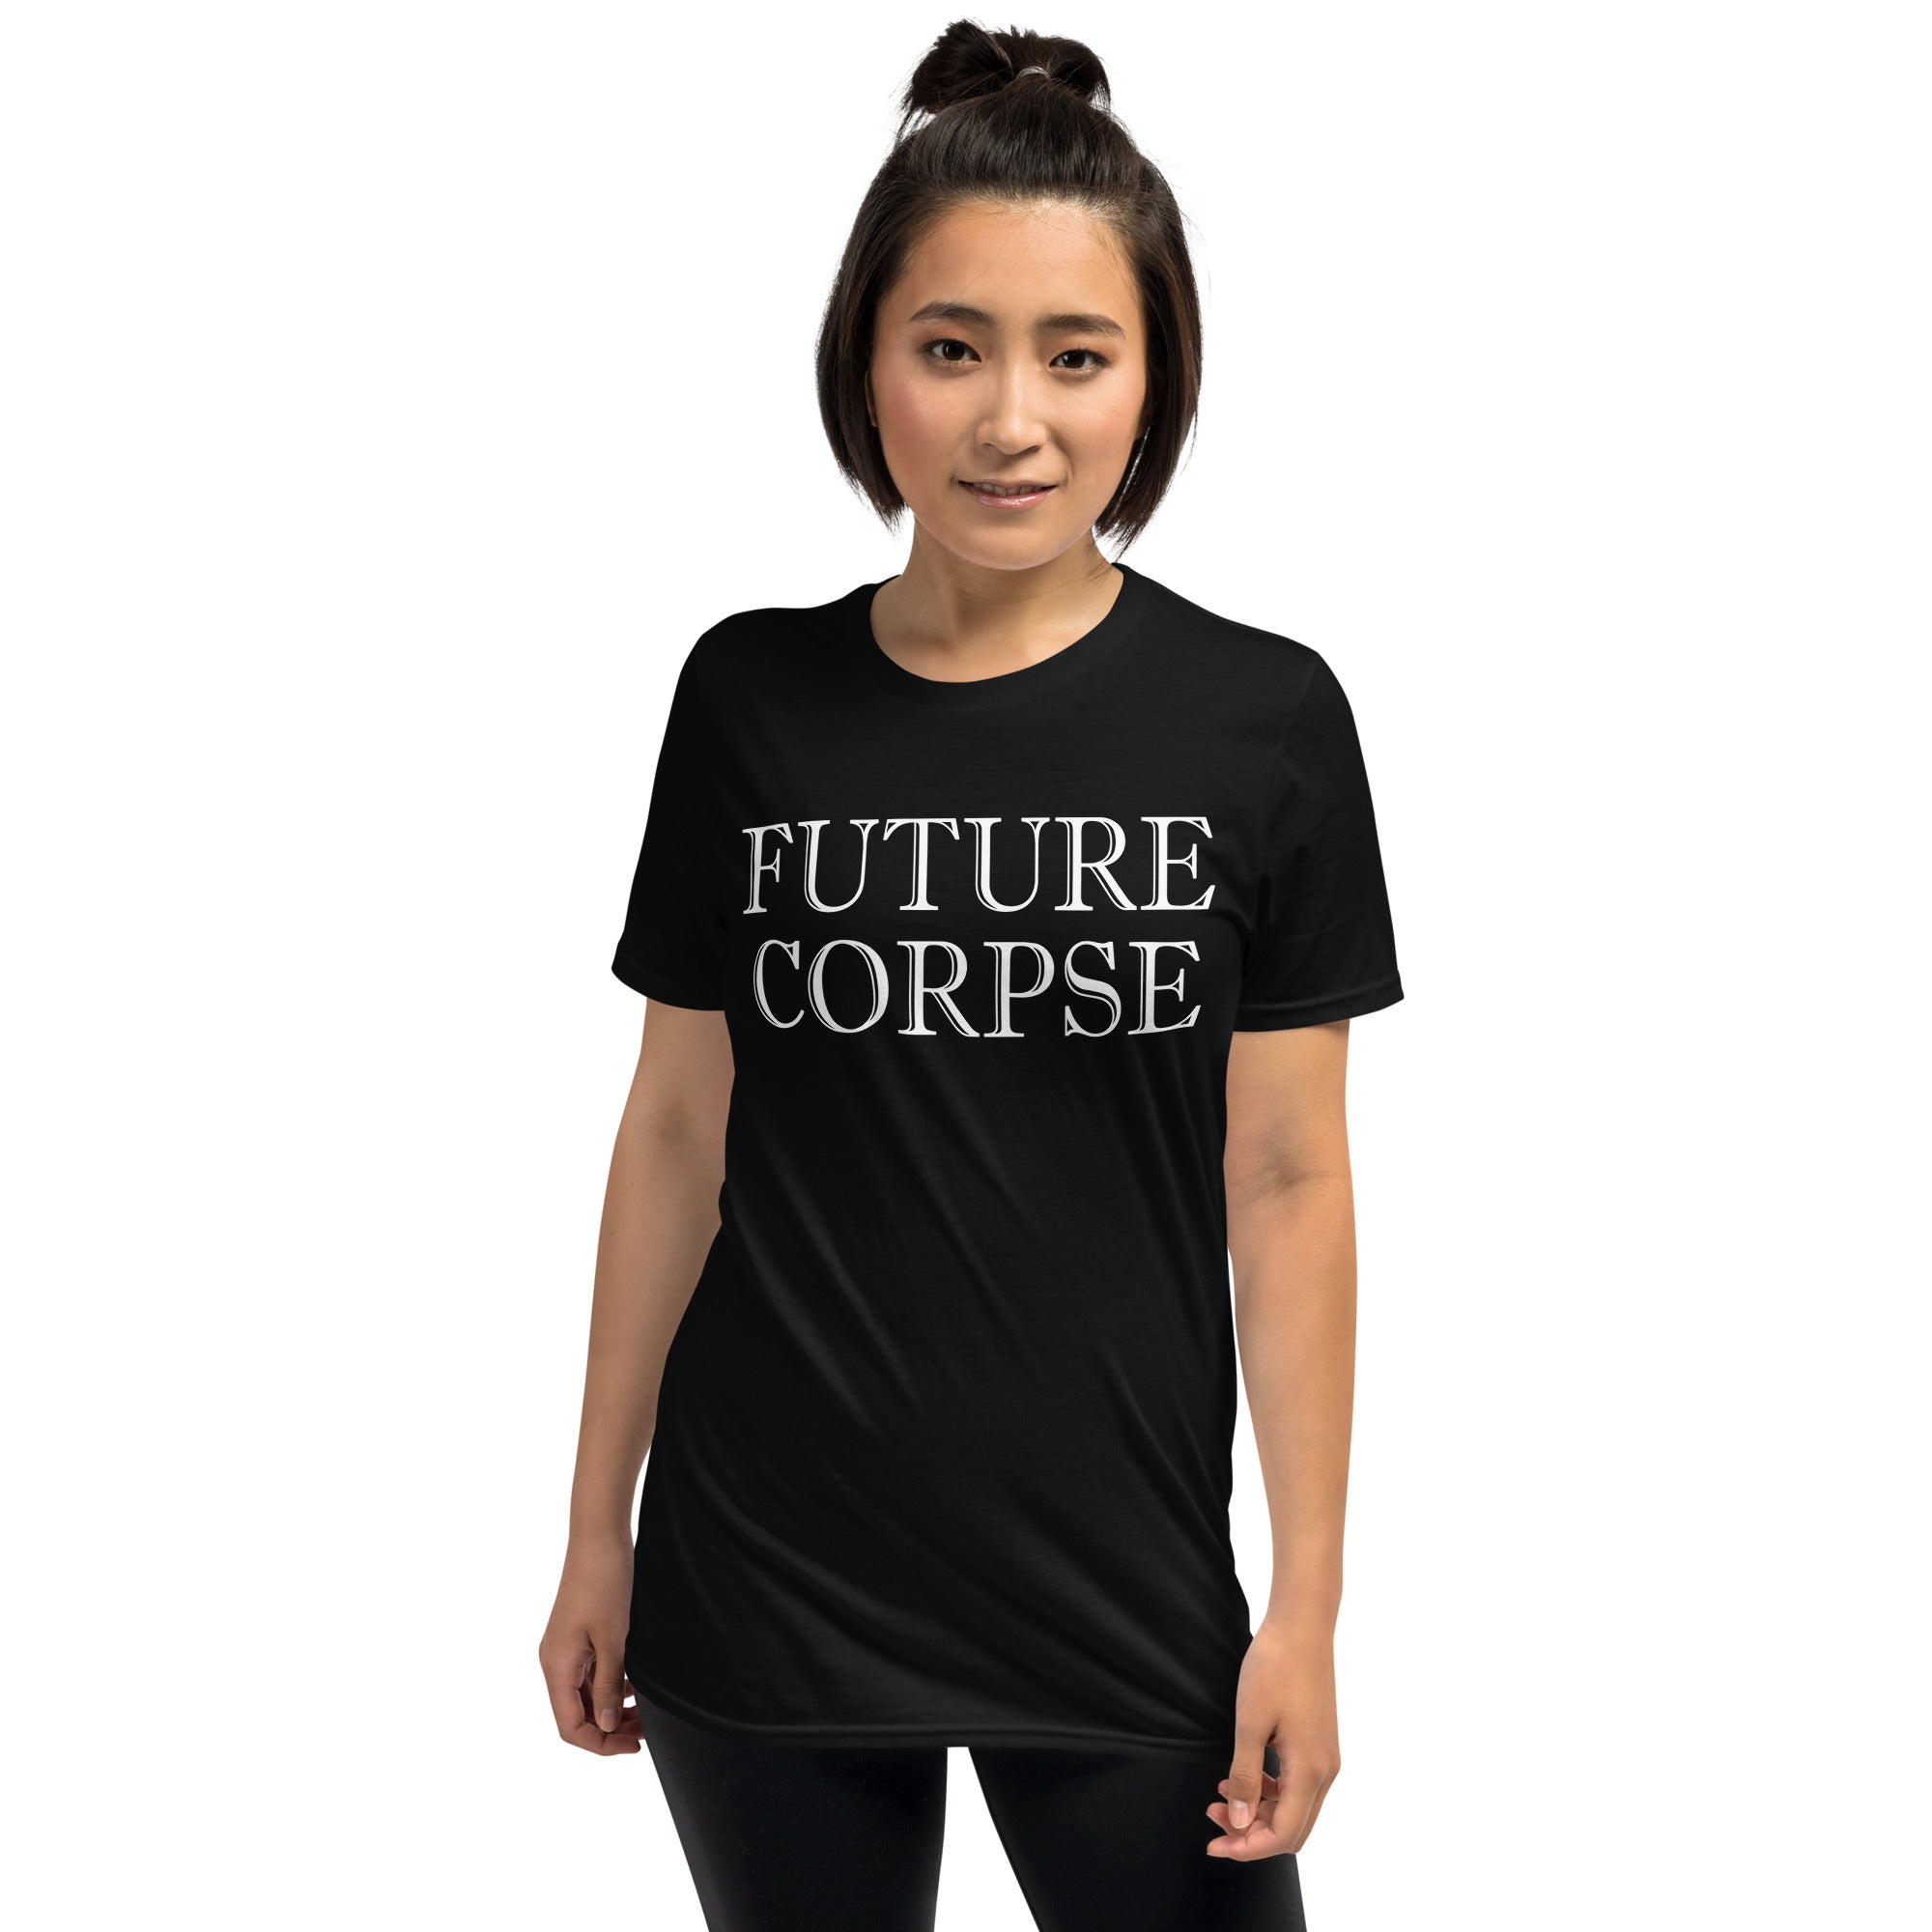 Future Corpse Ultimate Demise Men's Short Sleeve T-Shirt - Edge of Life Designs